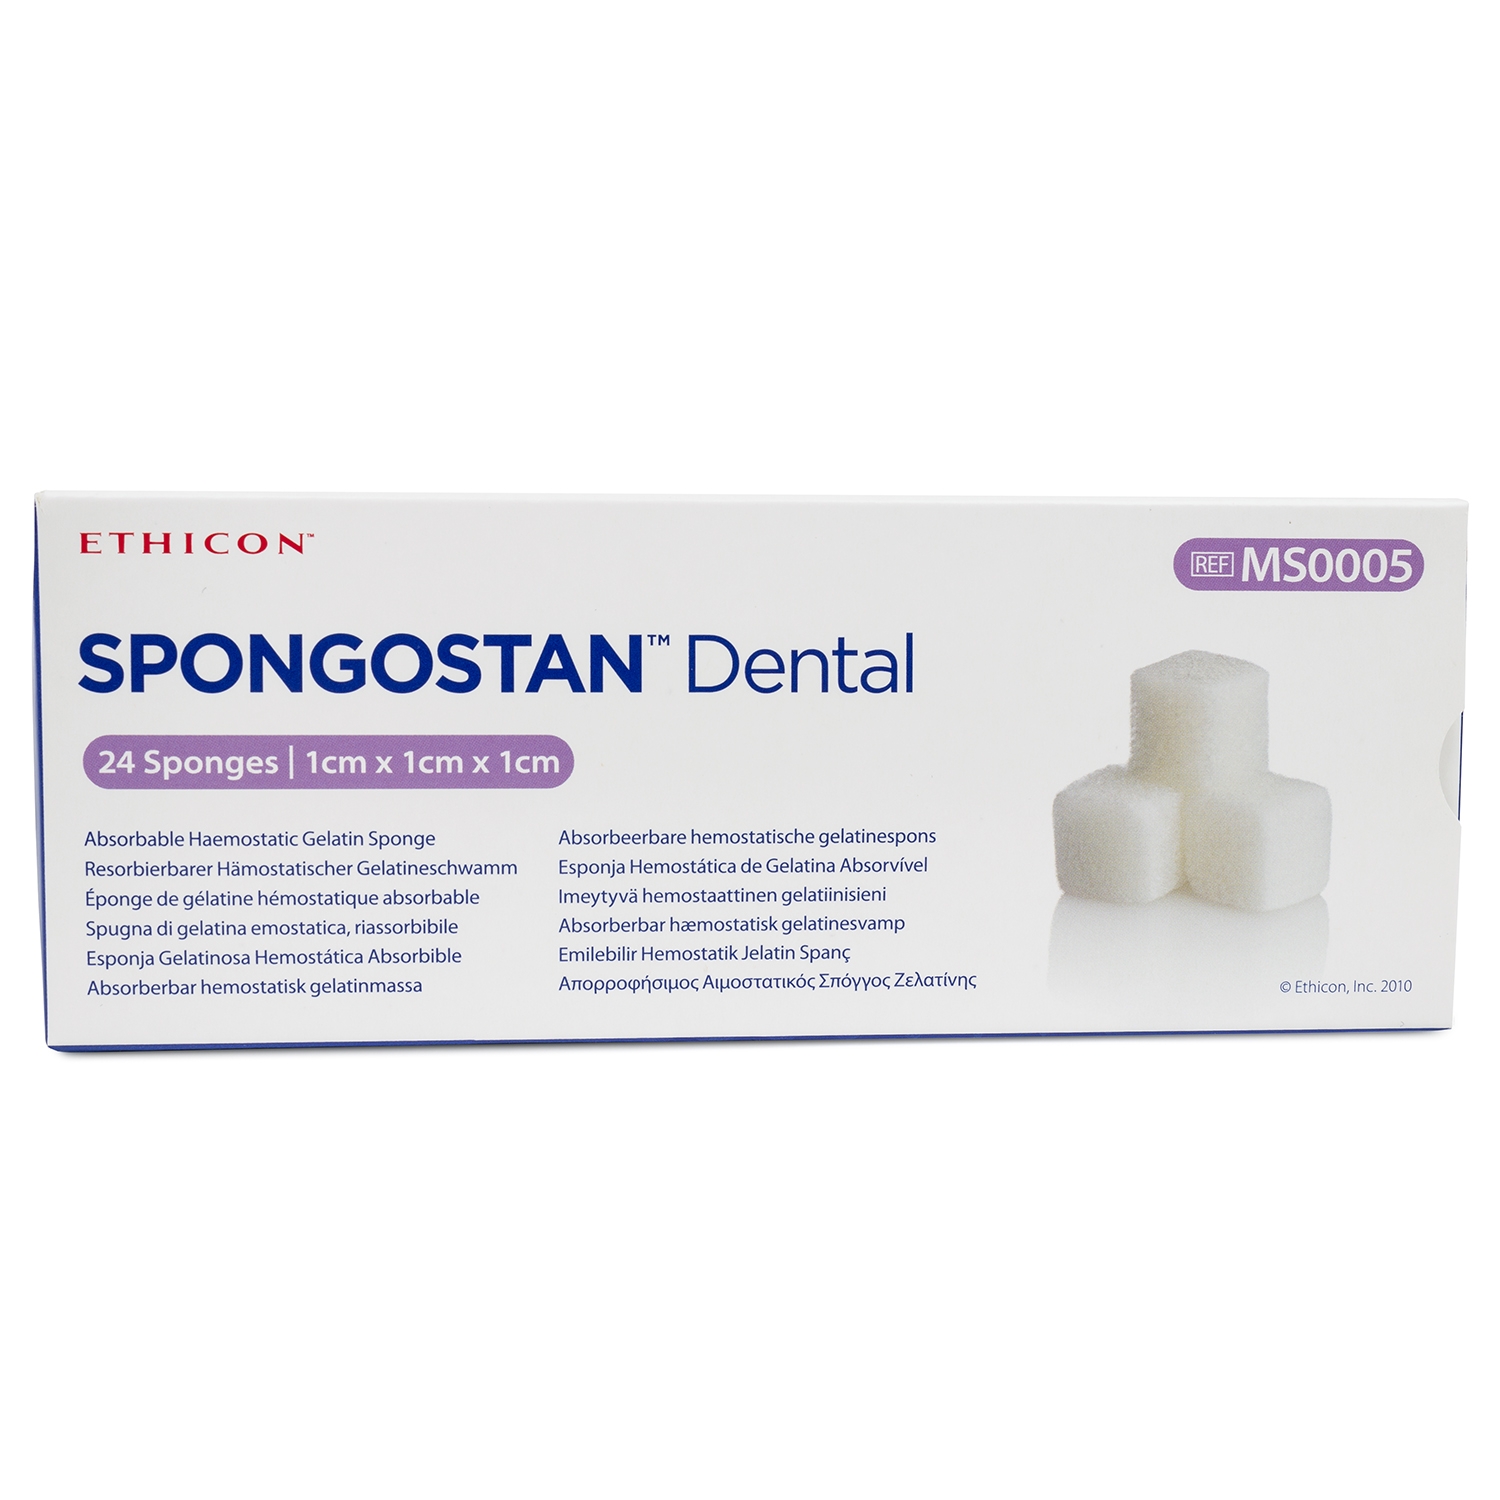 Spongostan dental - 10 x 10 x 10 mm (24 pcs)